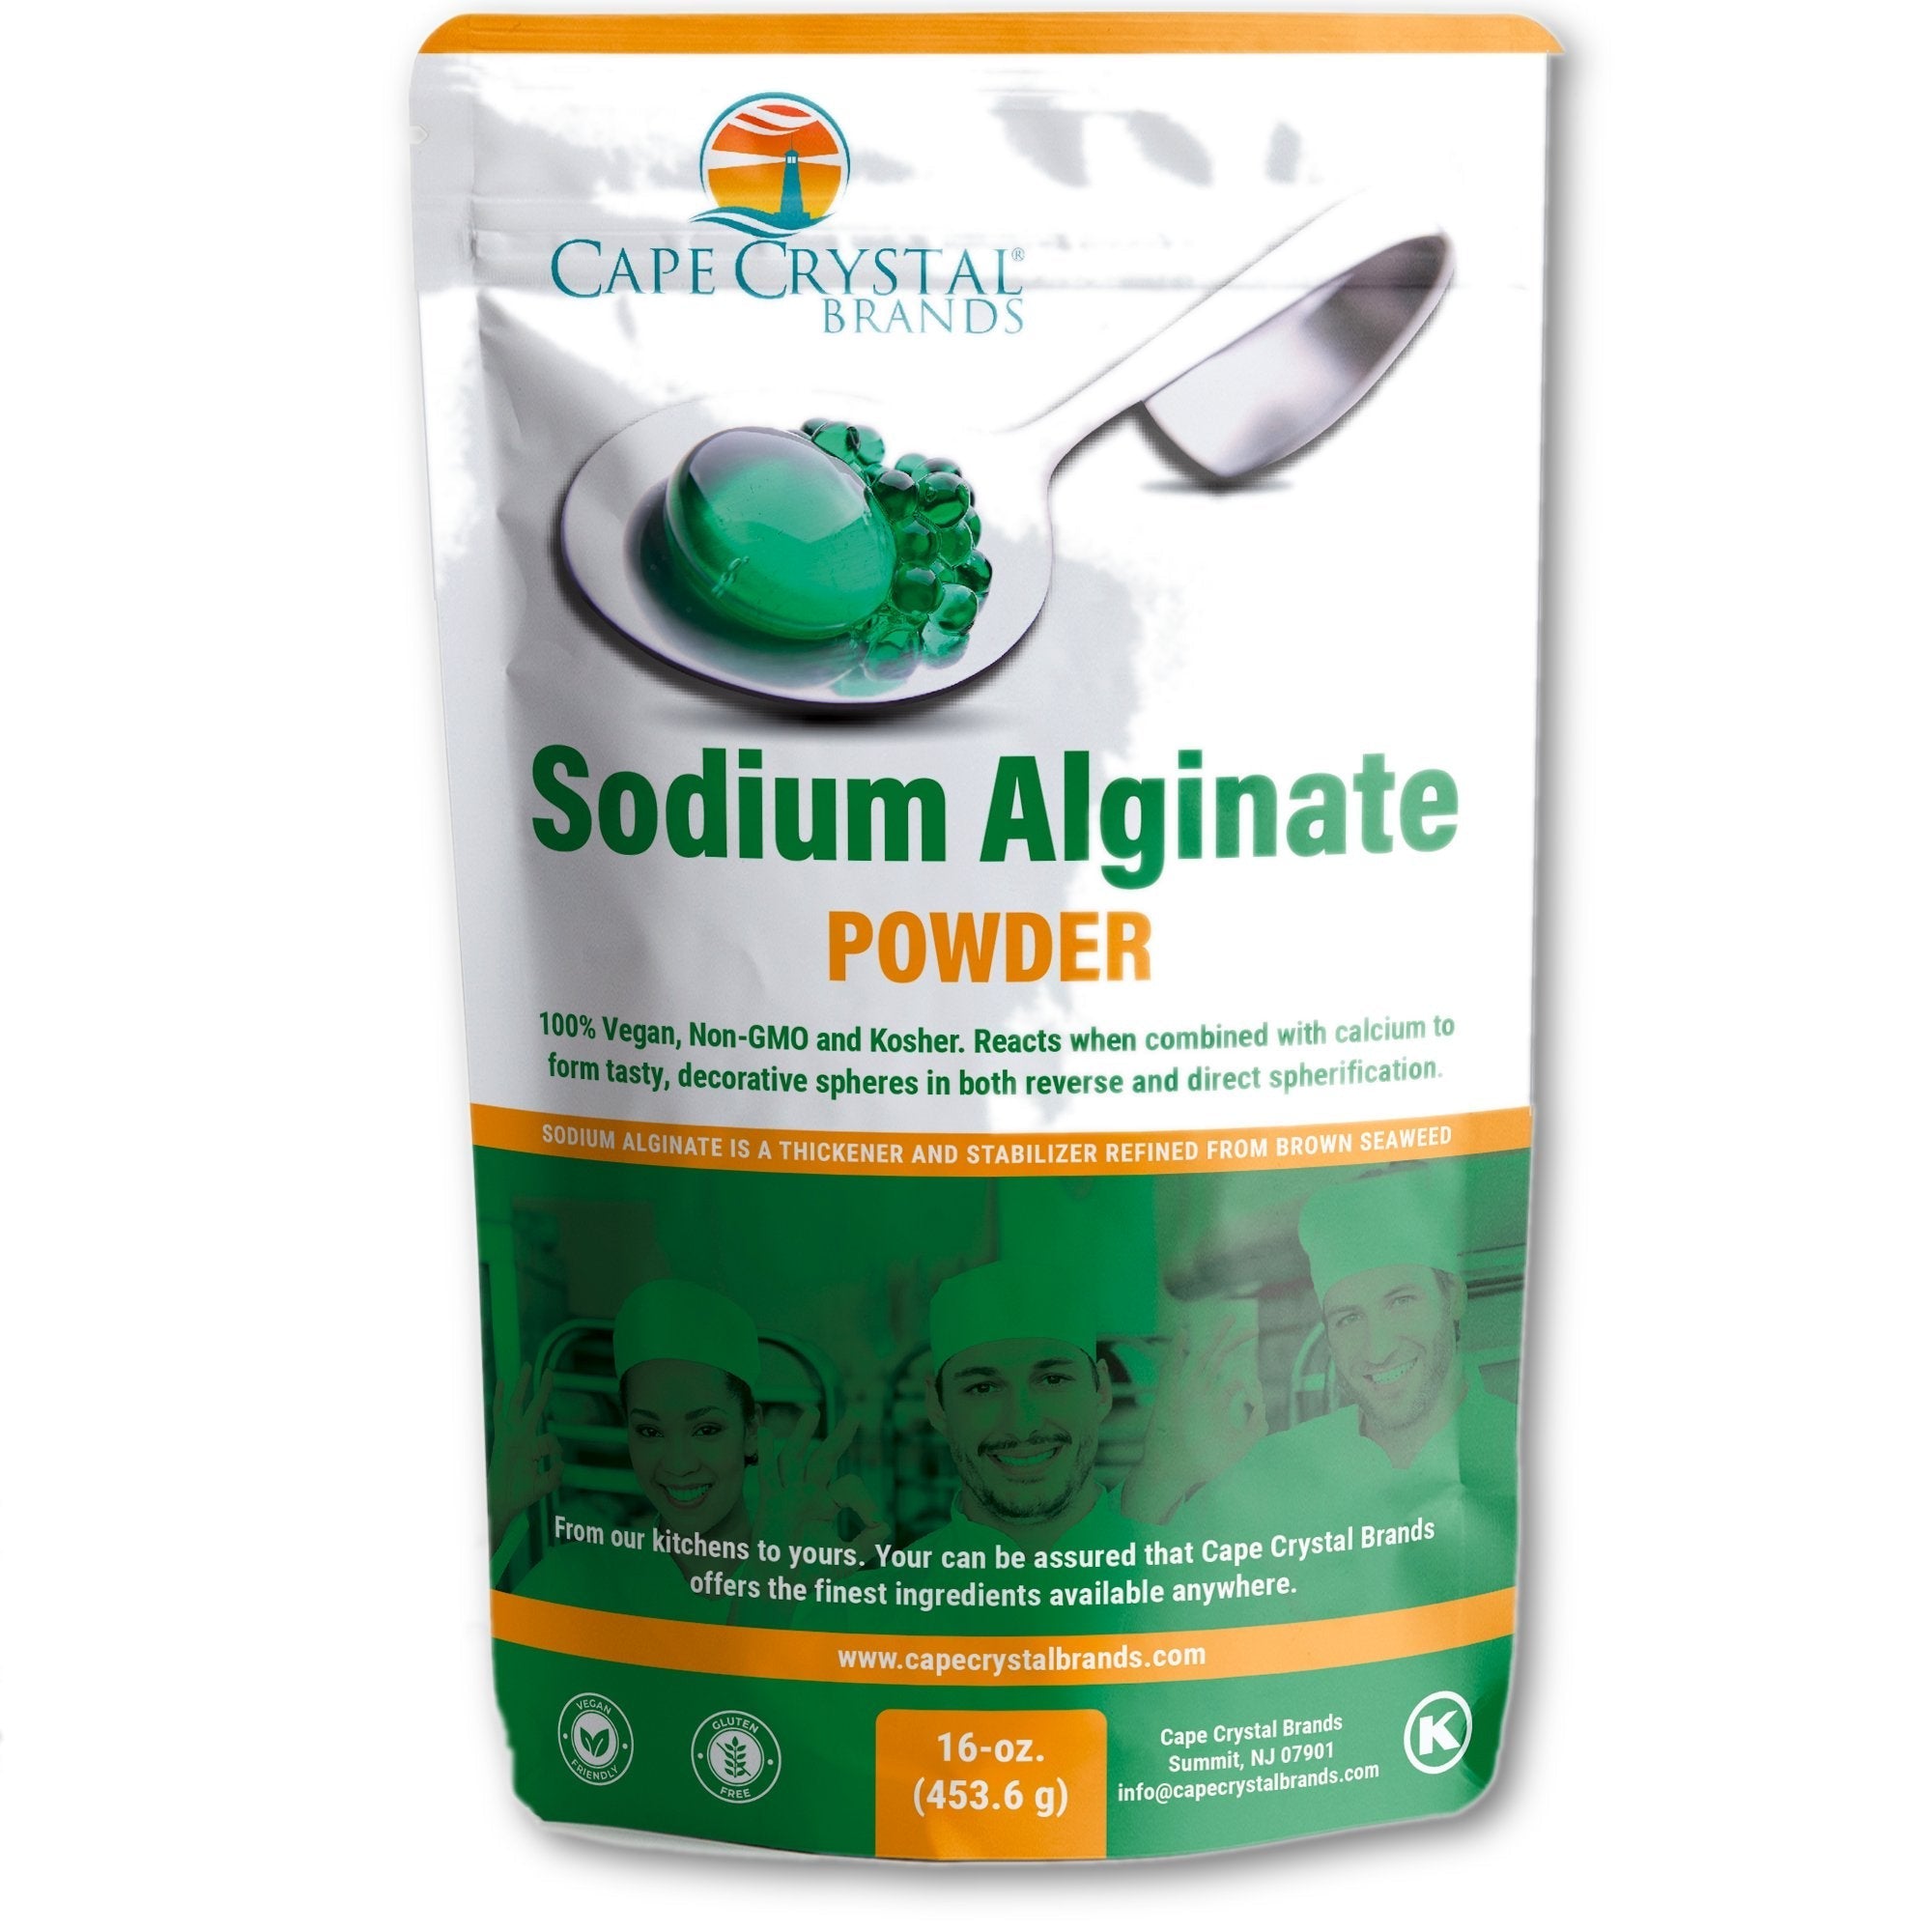 Alginate de sodium - Kalys Gastronomie